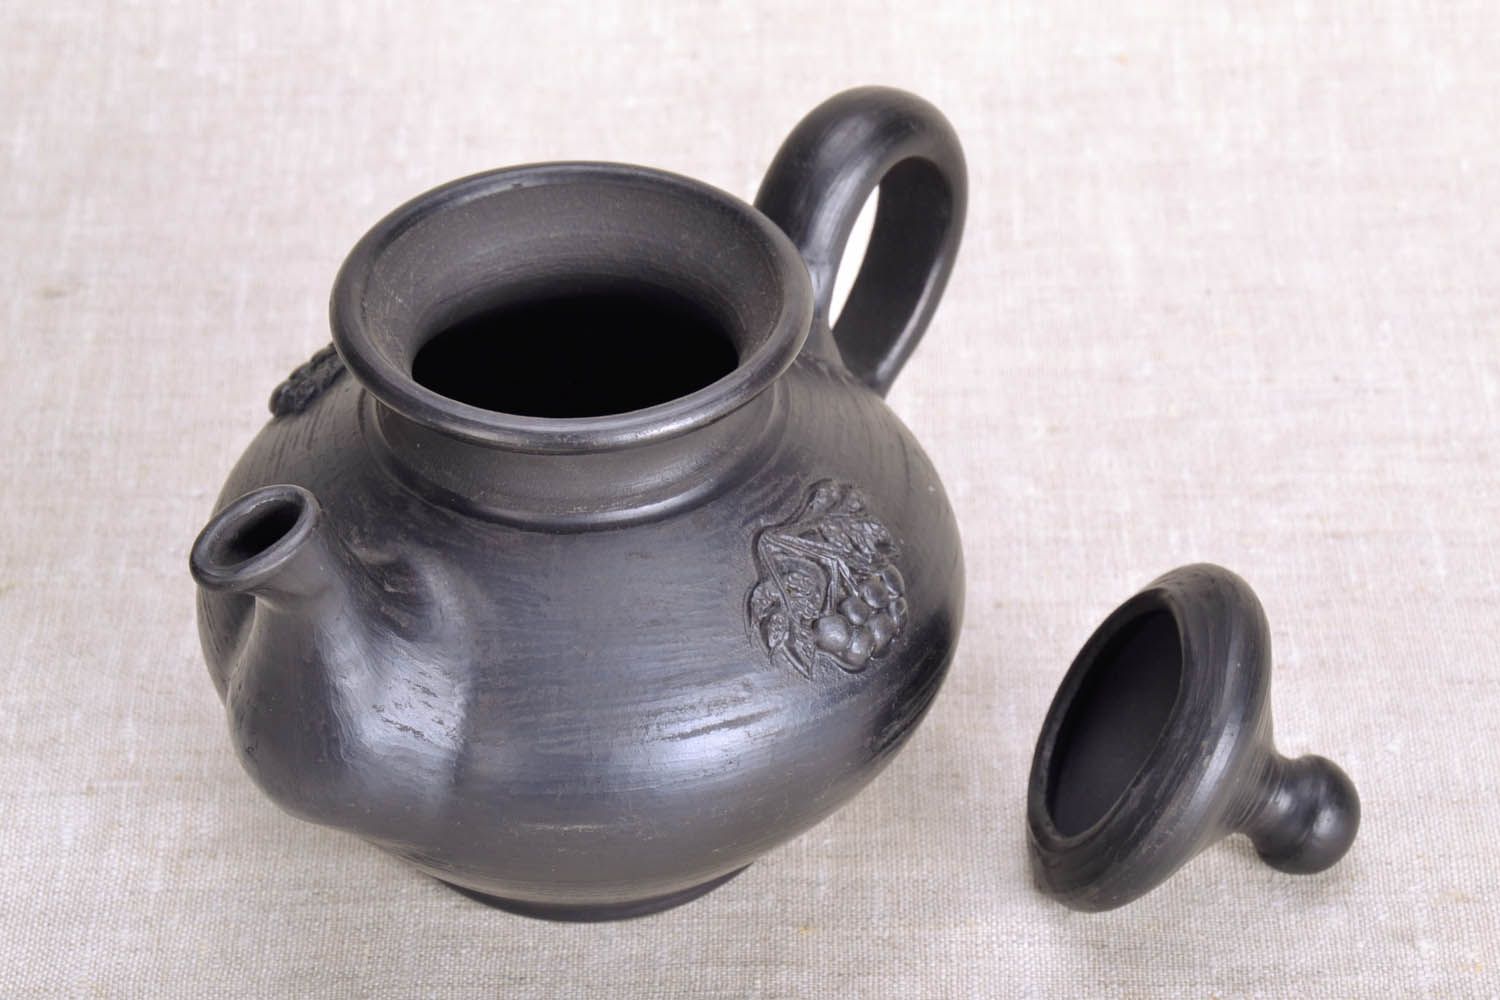 Homemade clay teapot photo 3